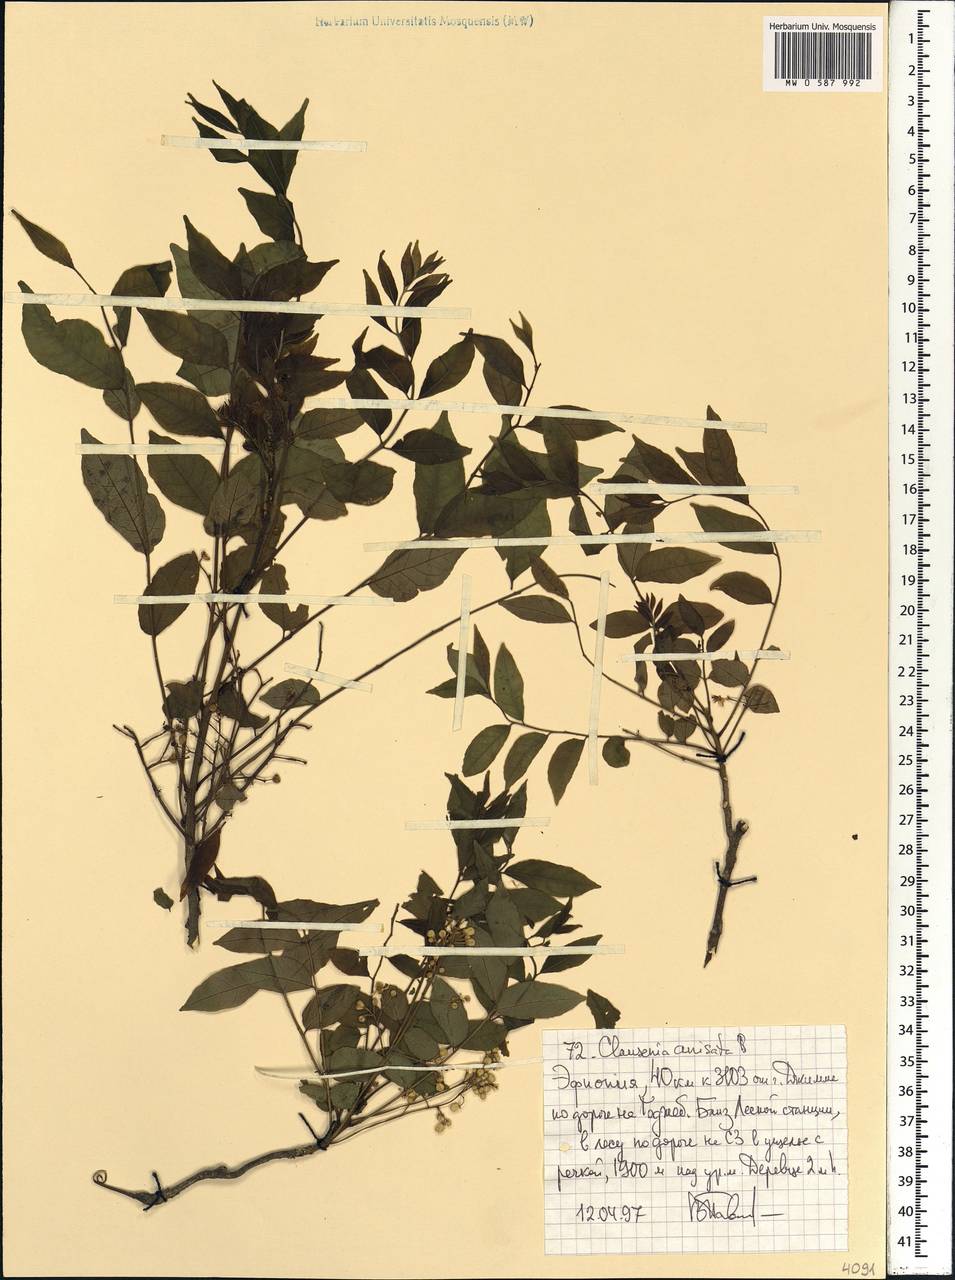 Clausena anisata (Willd.) Hook. fil., Africa (AFR) (Ethiopia)